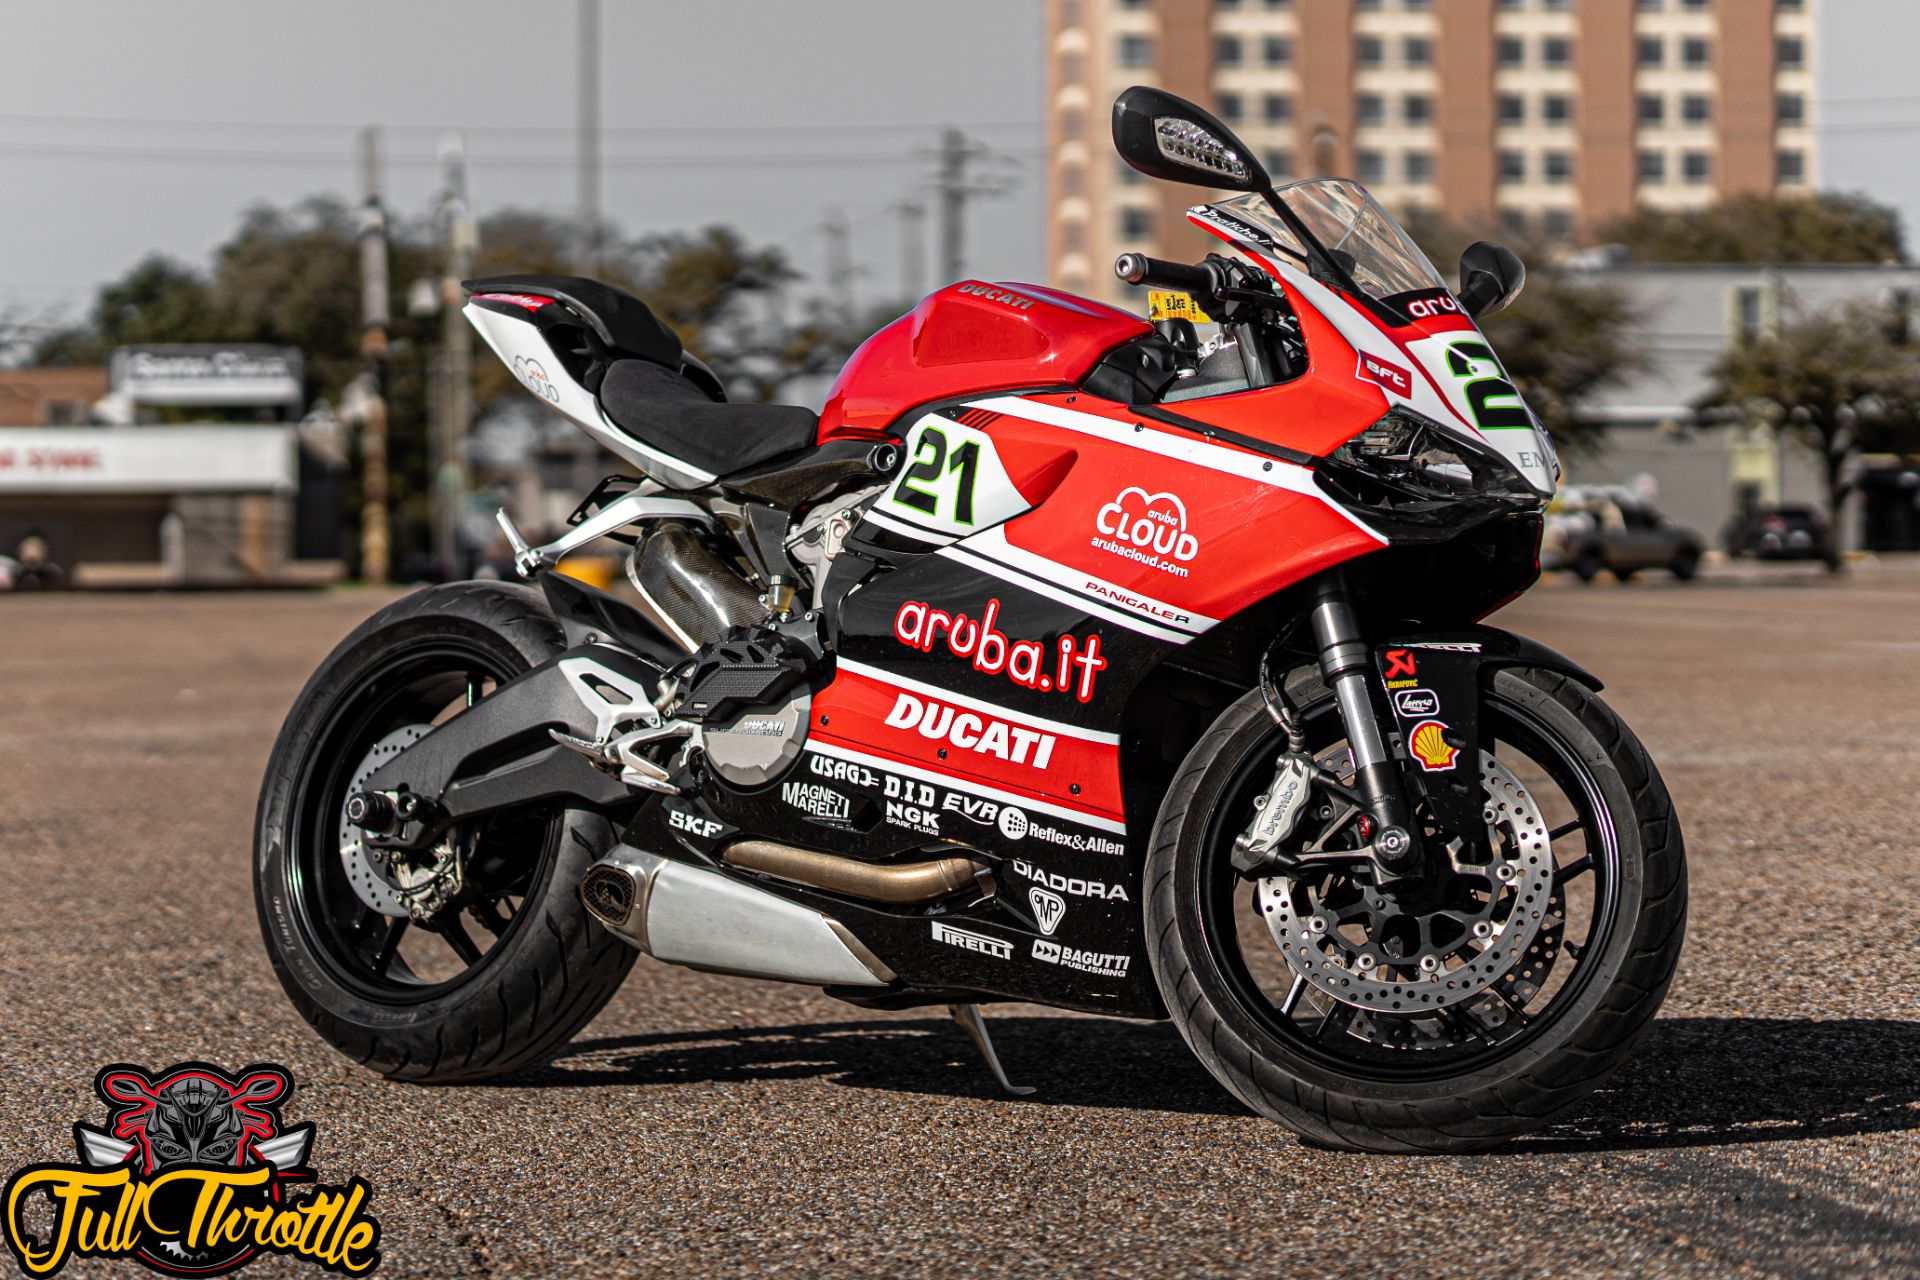 2014 Ducati Superbike 899 Panigale in Houston, Texas - Photo 1